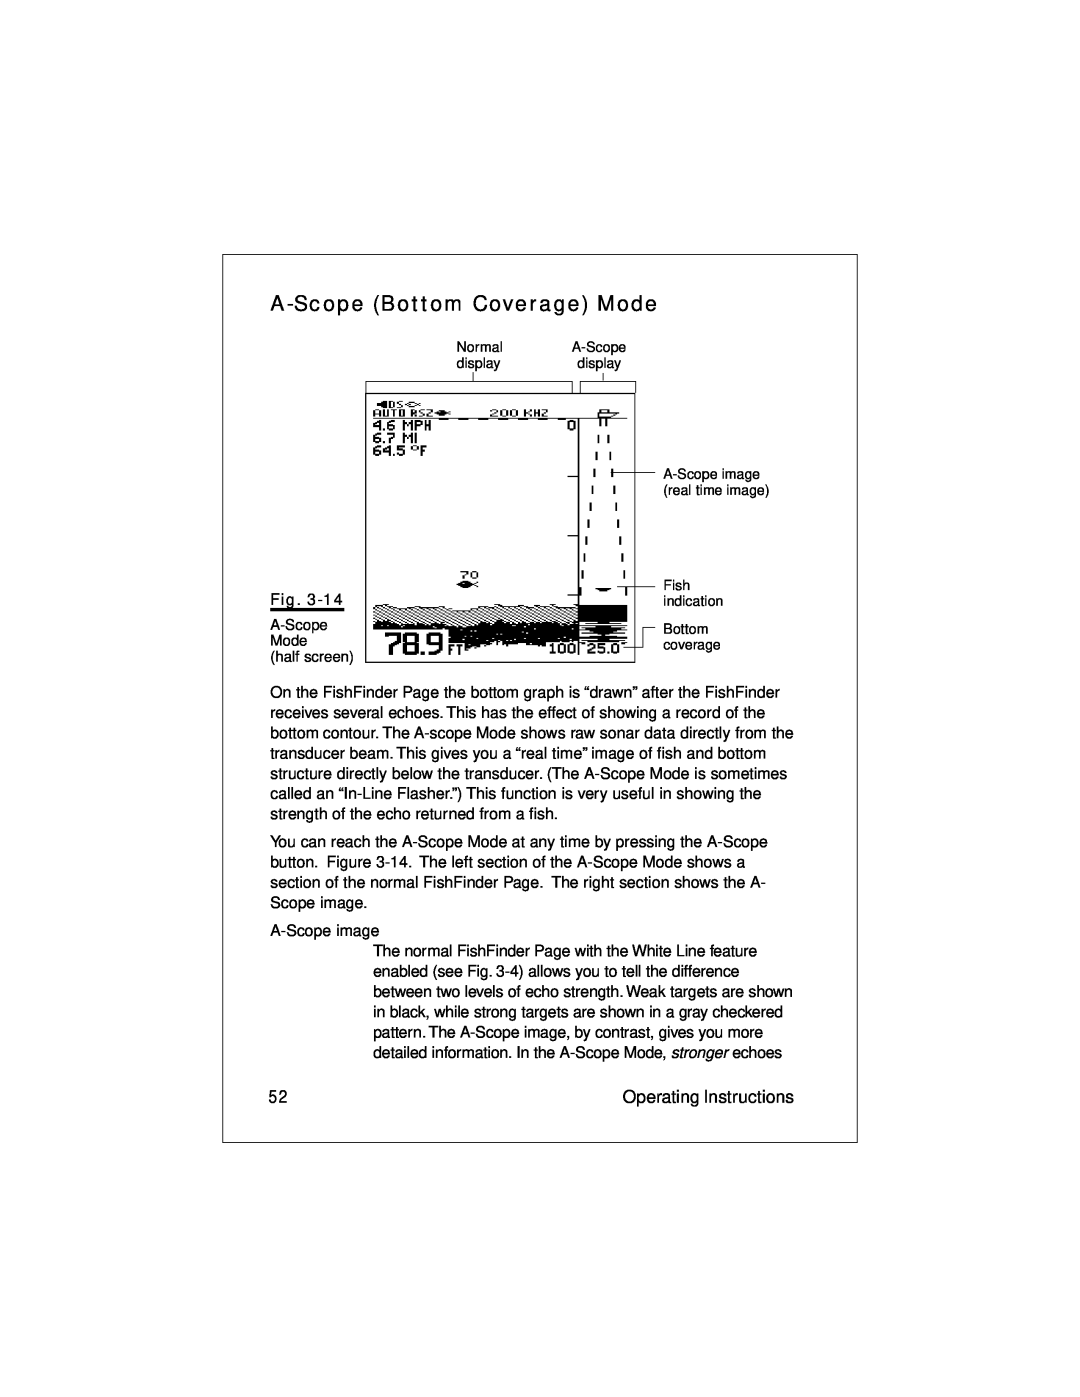 Raymarine L470 instruction manual A-Scope Bottom Coverage Mode, Operating Instructions 